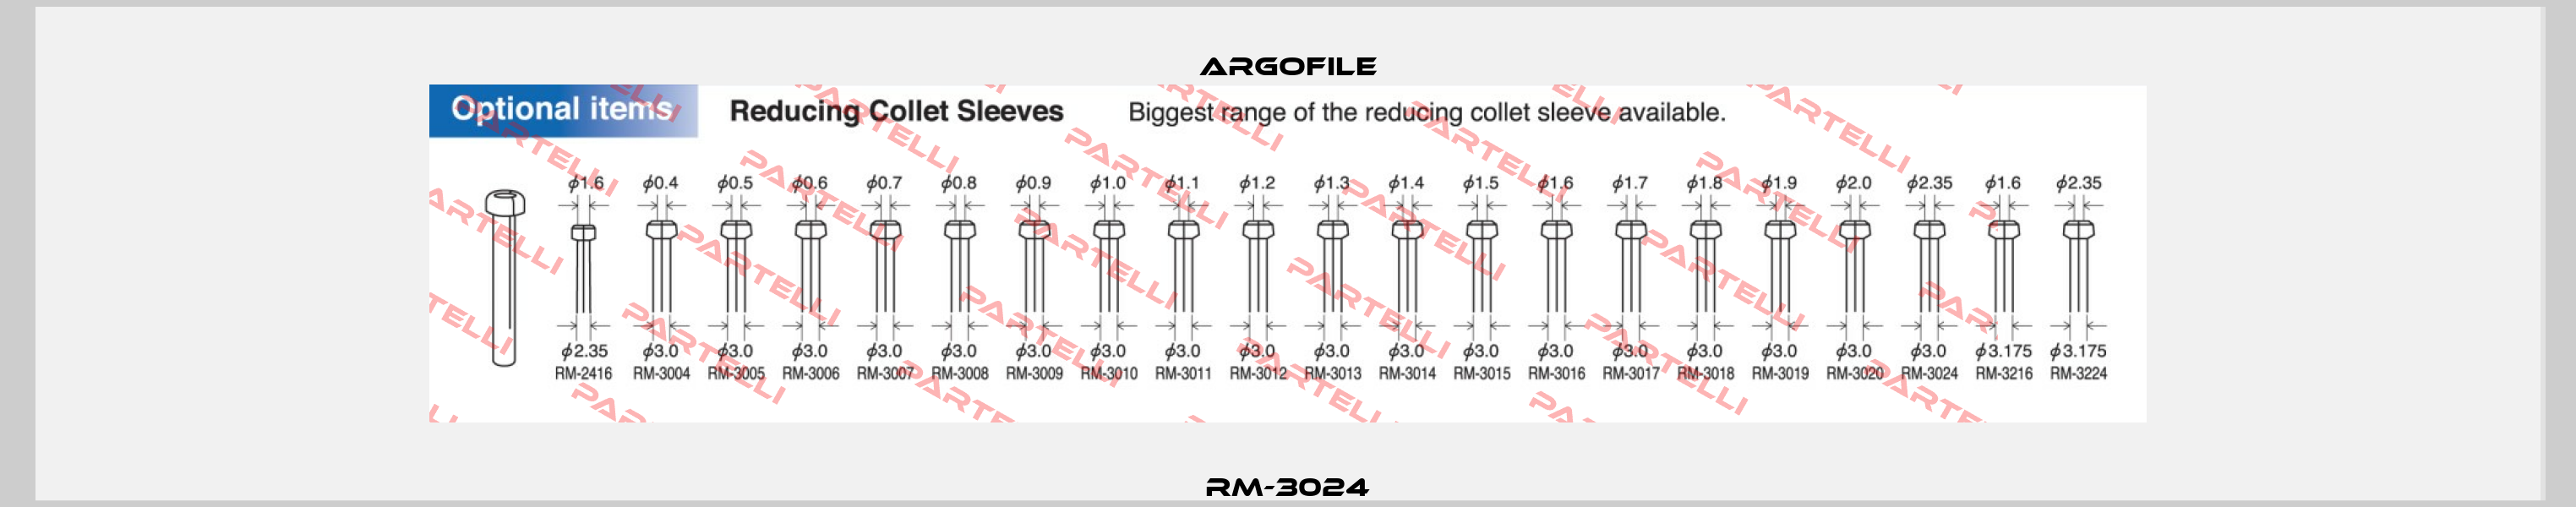 RM-3024 Argofile